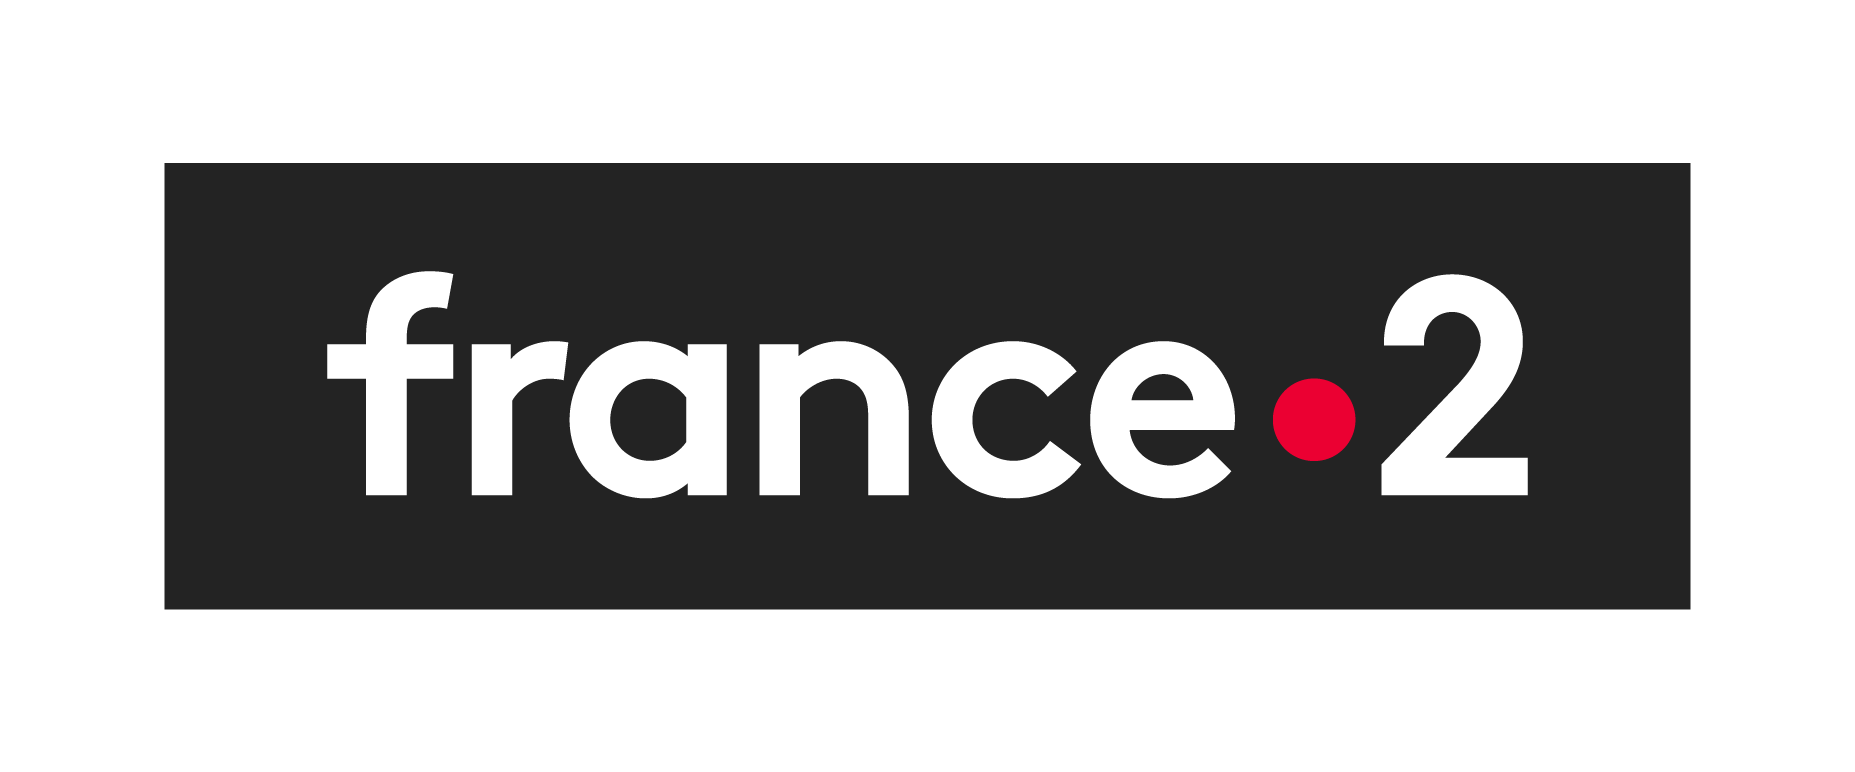 Включи q 2. France 2. Канал France 2'. France 2 logo. Fr2 бренд.